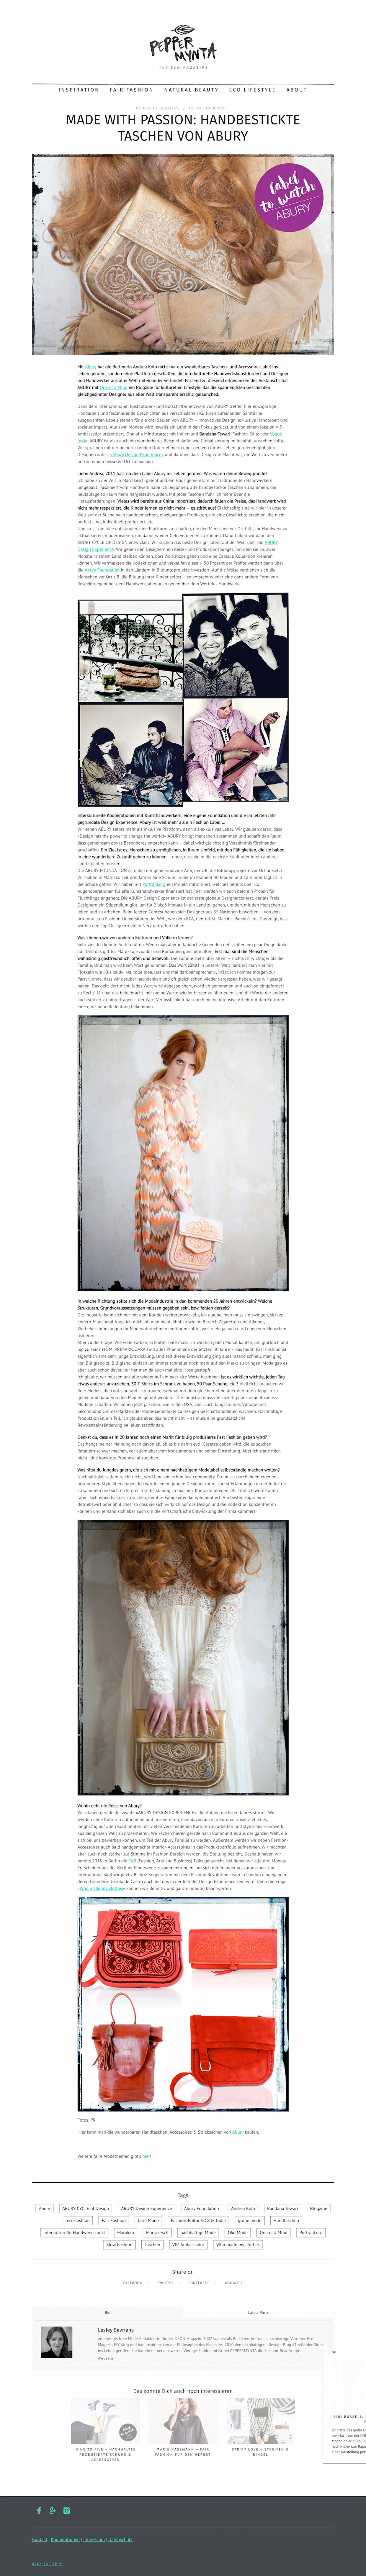 ABURY Berber bags featured in PepperMynta Magazine